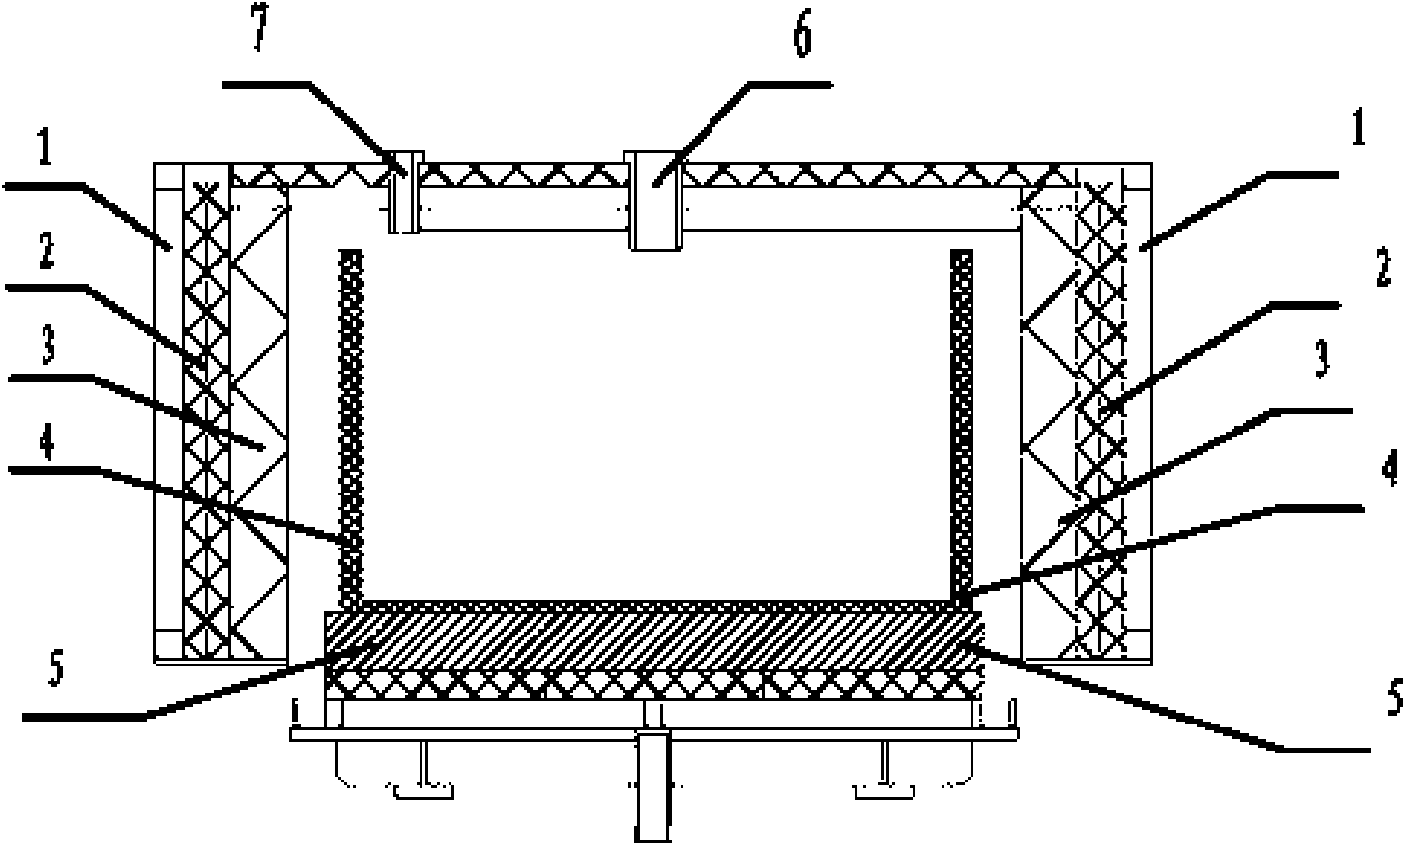 Insulation system for polycrystalline silicon ingot furnace